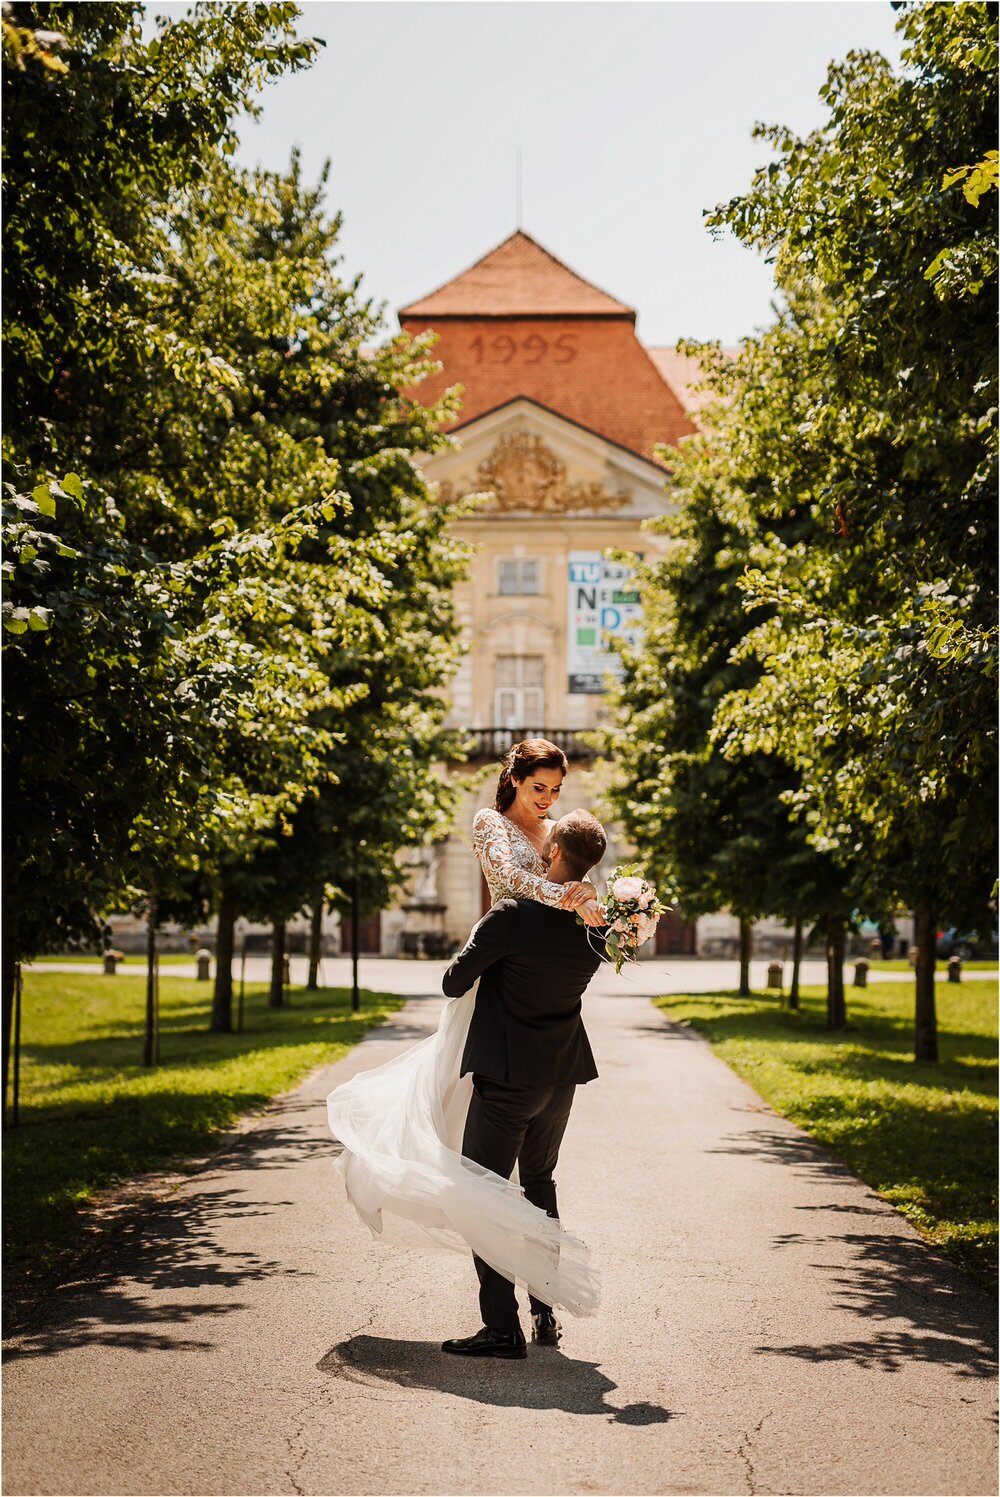 best of wedding photography 2019 photographer italy ireland tuscany santorini greece spain barcelona lake como chateux scotland destination wedding 0059.jpg